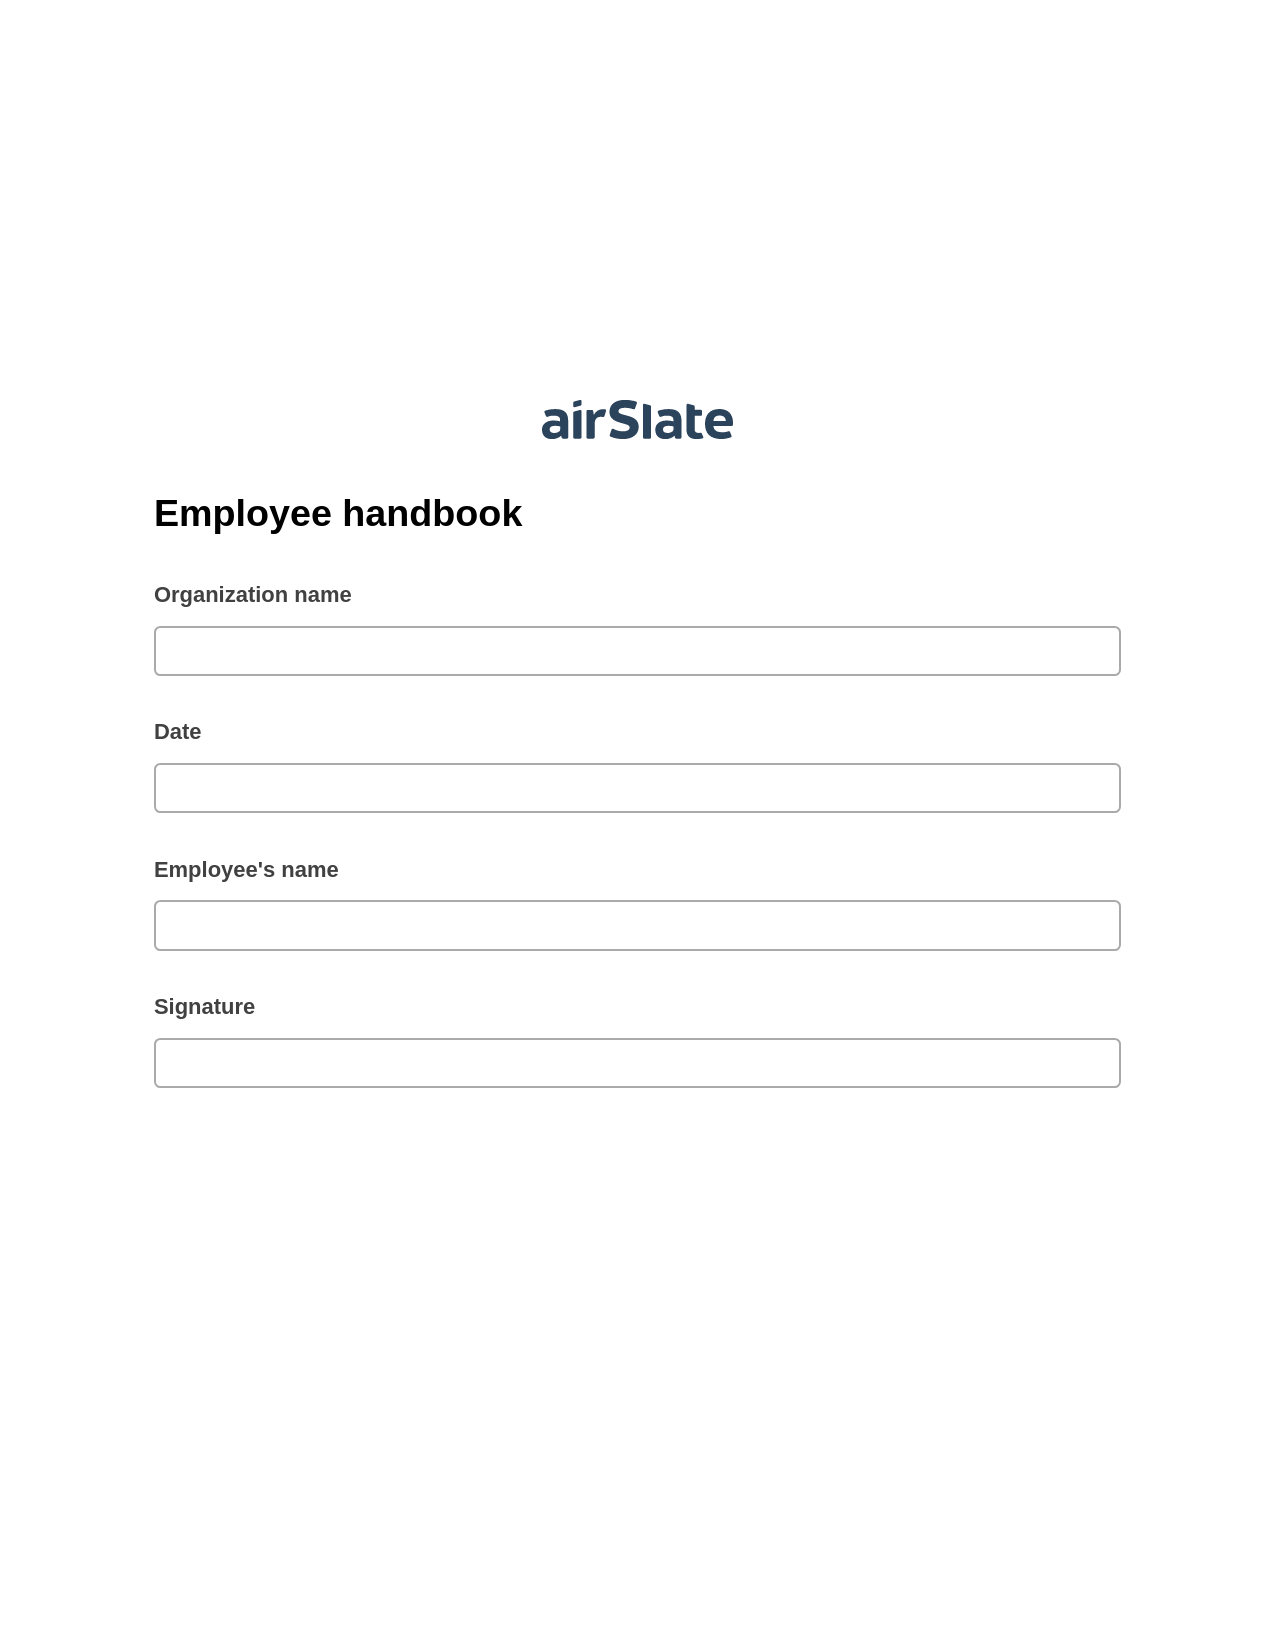 Multirole Employee handbook Pre-fill from CSV File Bot, Update Salesforce Record Bot, Export to Google Sheet Bot